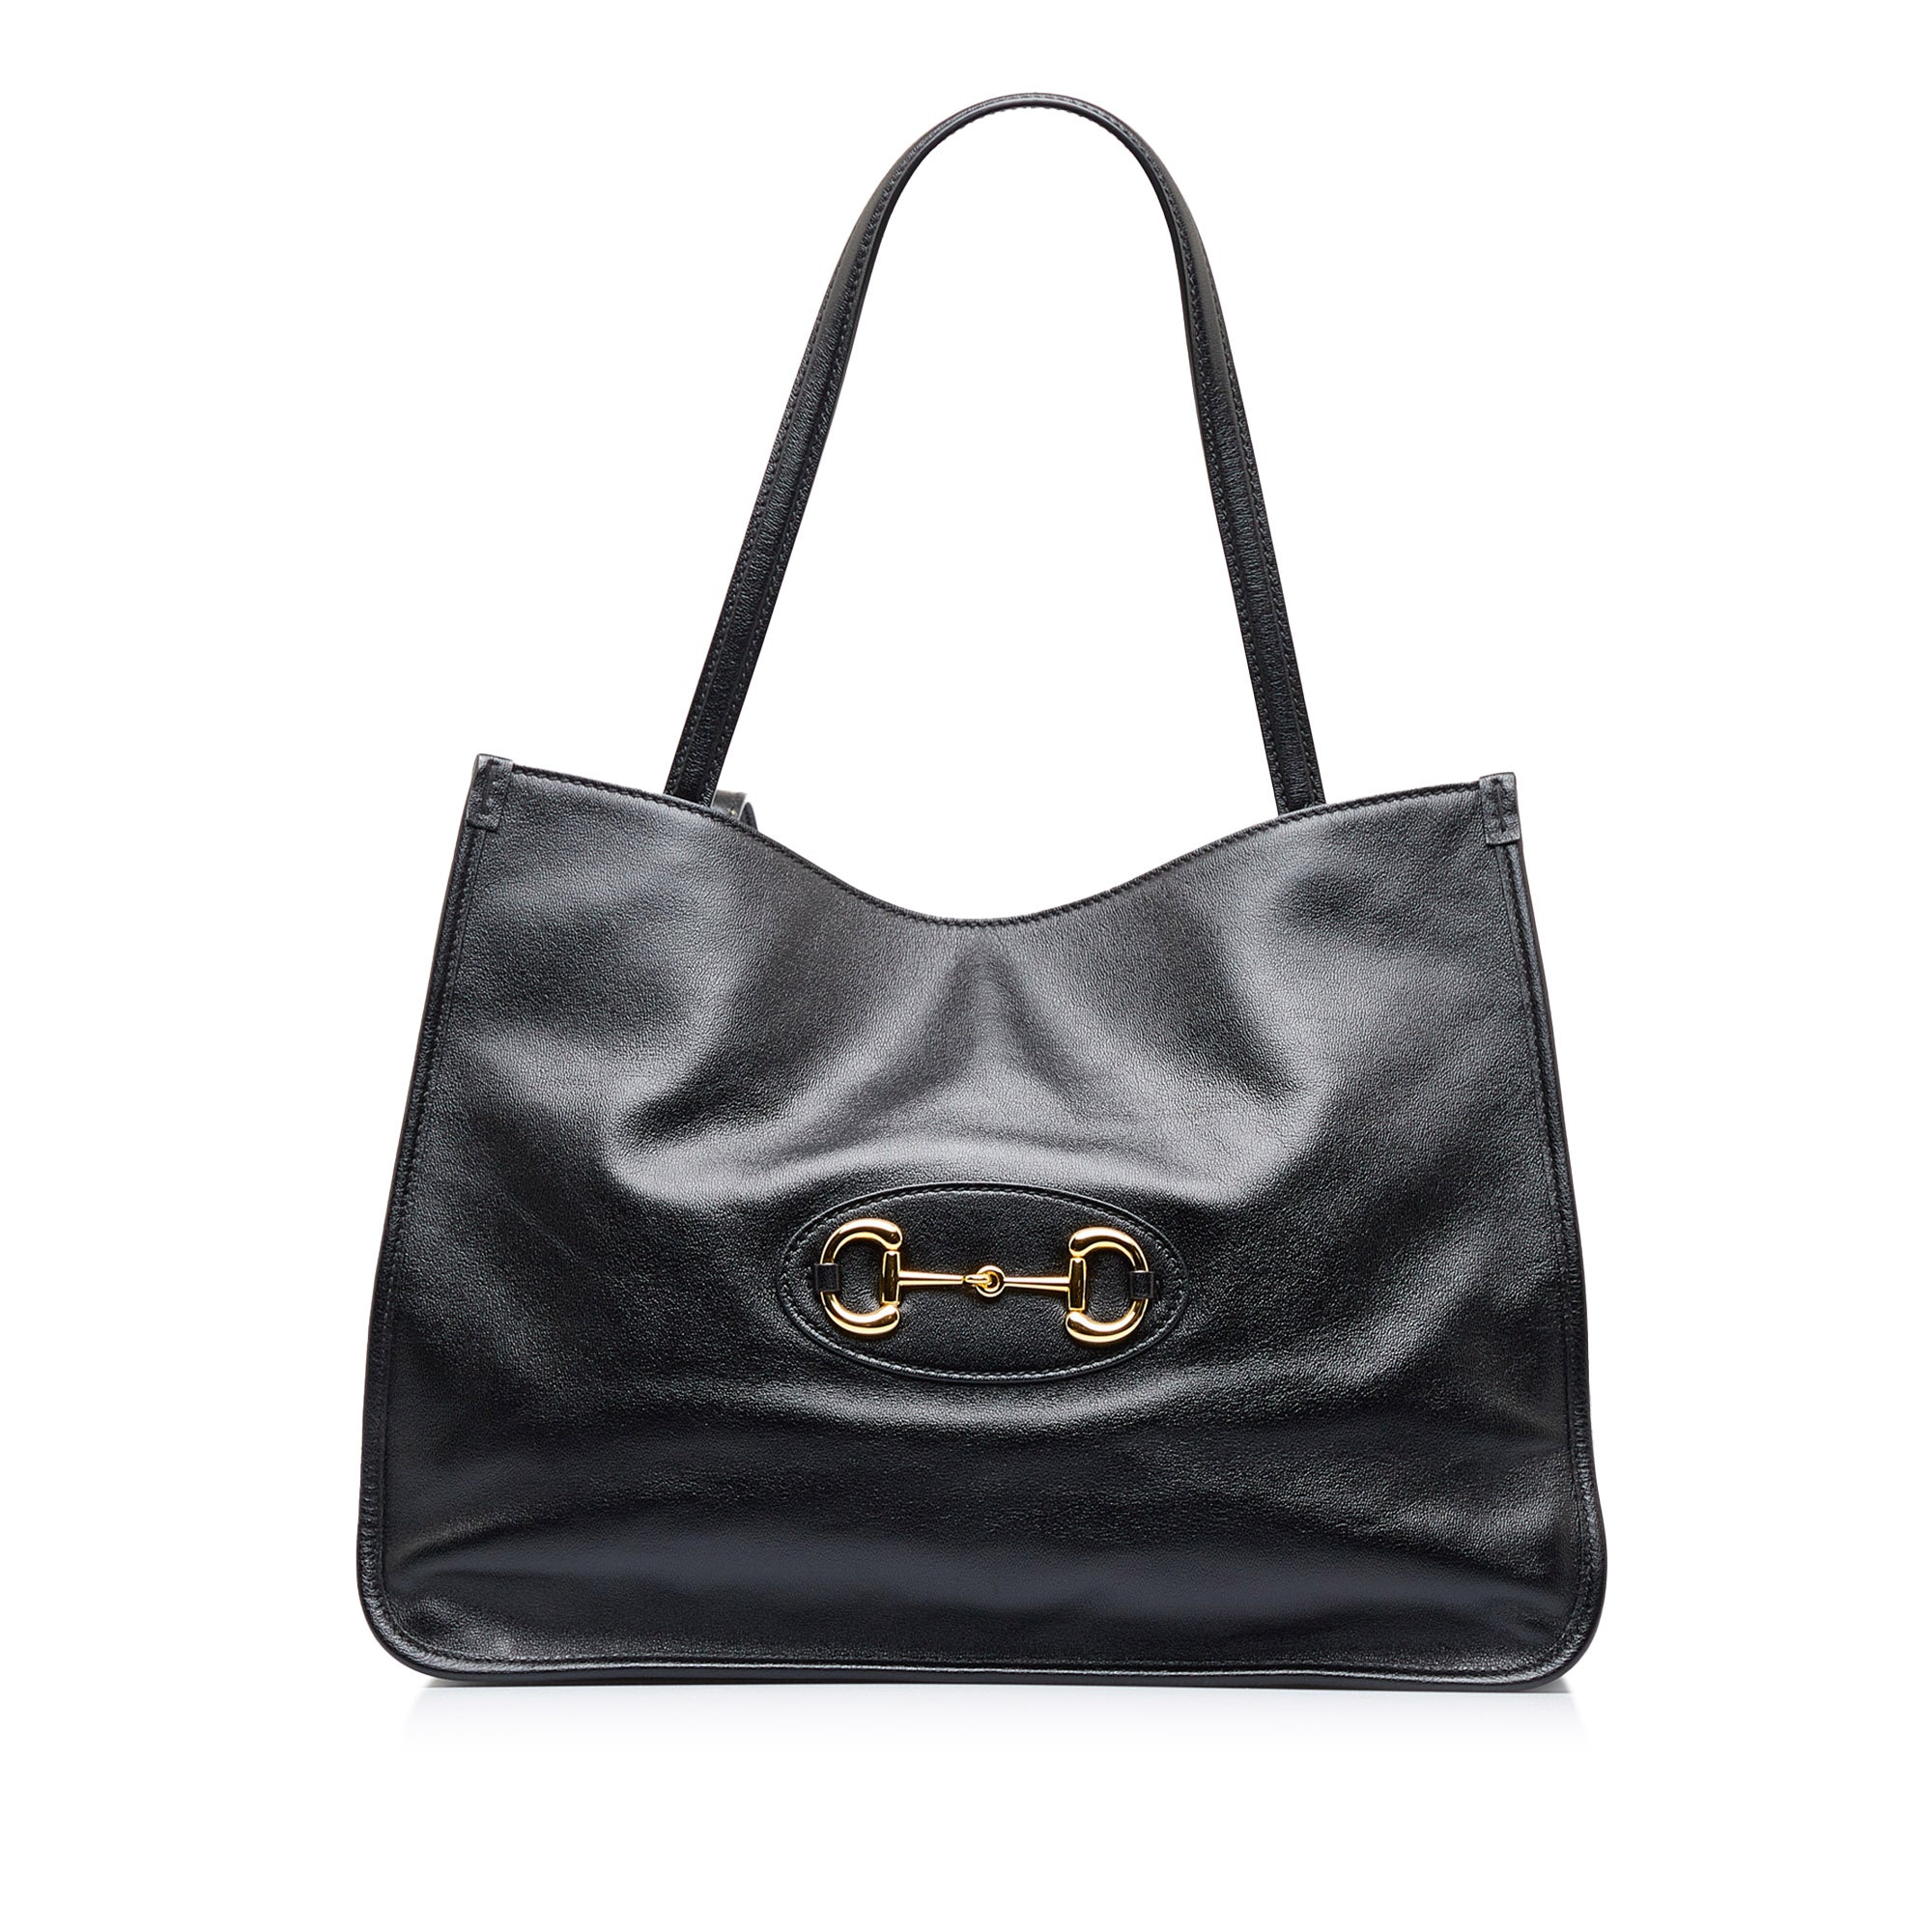 Gucci Interlocking G Shoulder Bag Small Black